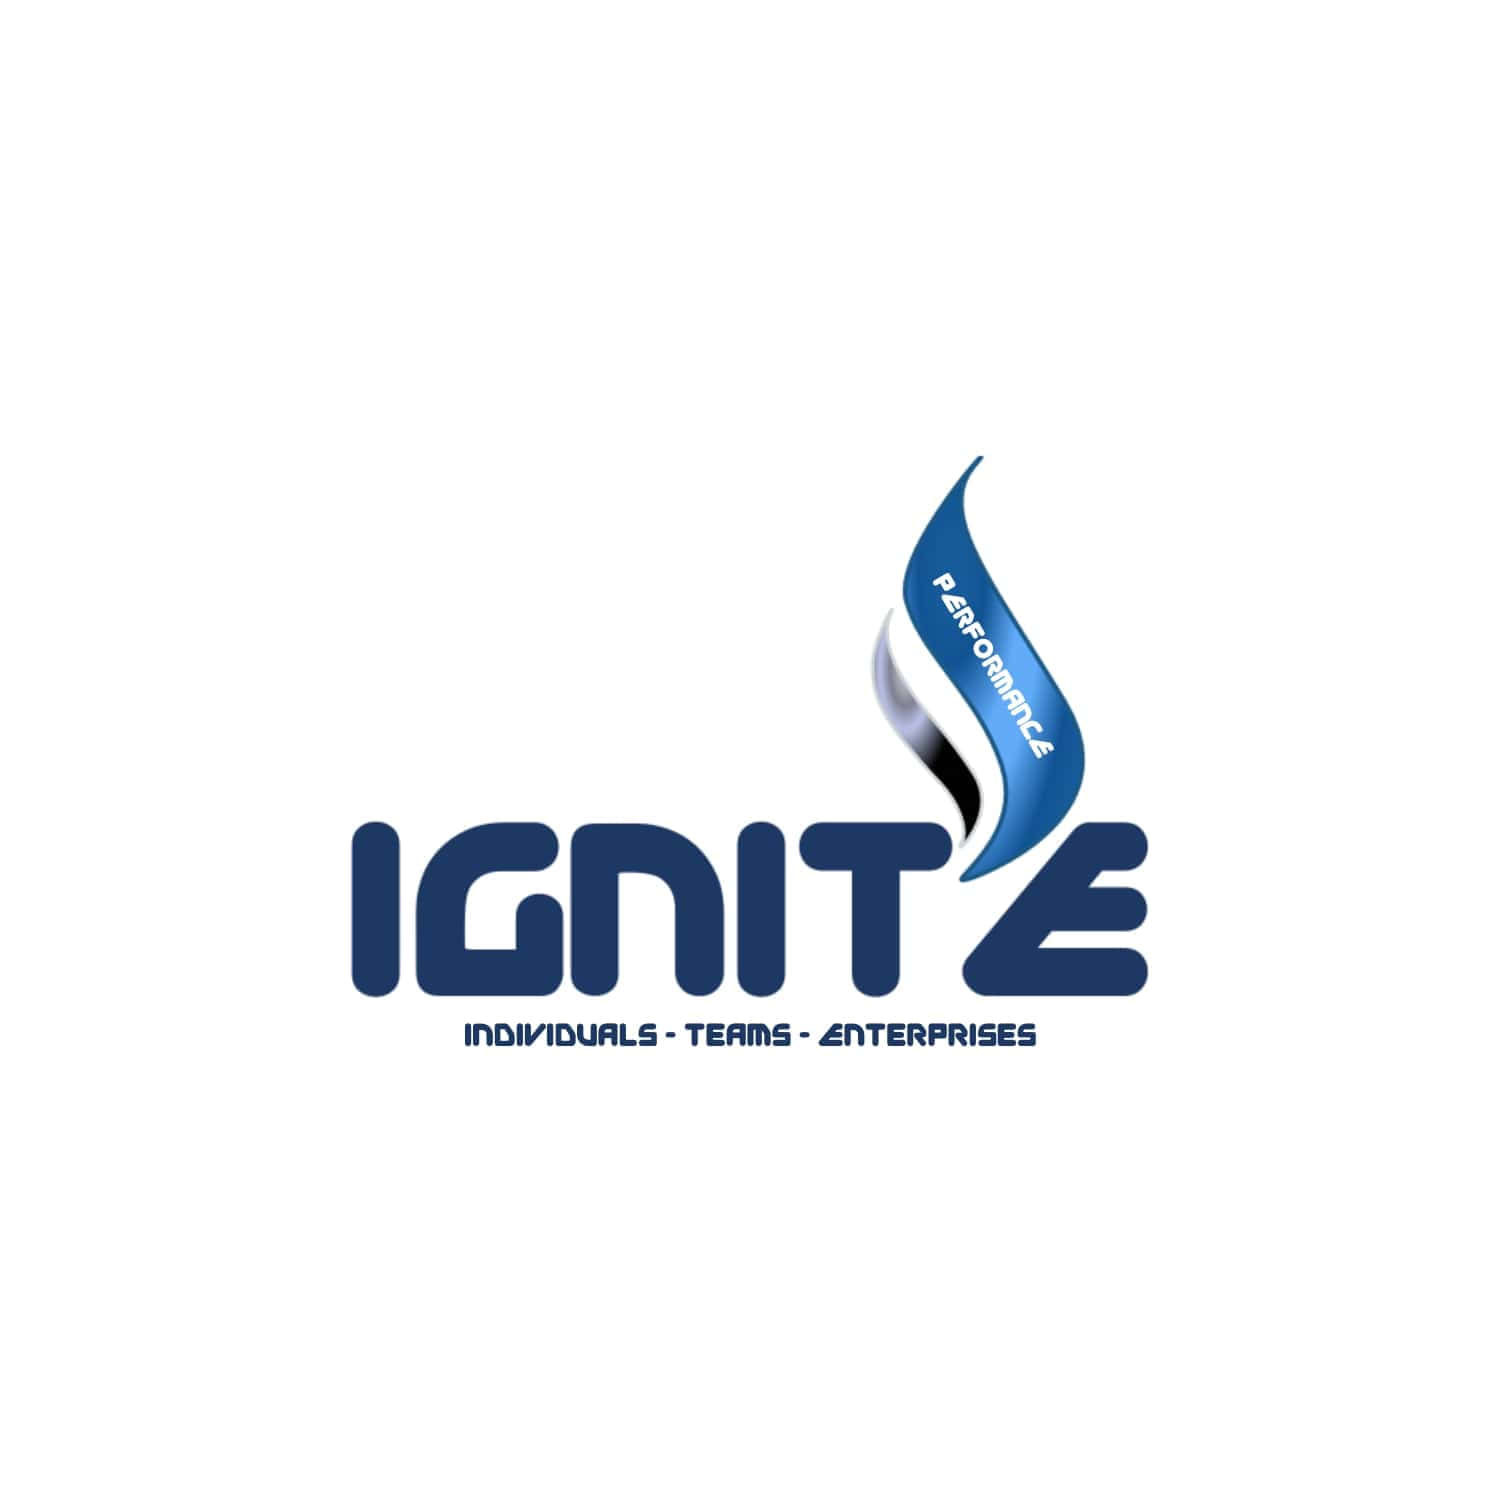 Ignite Logo Flame Design Wallpaper